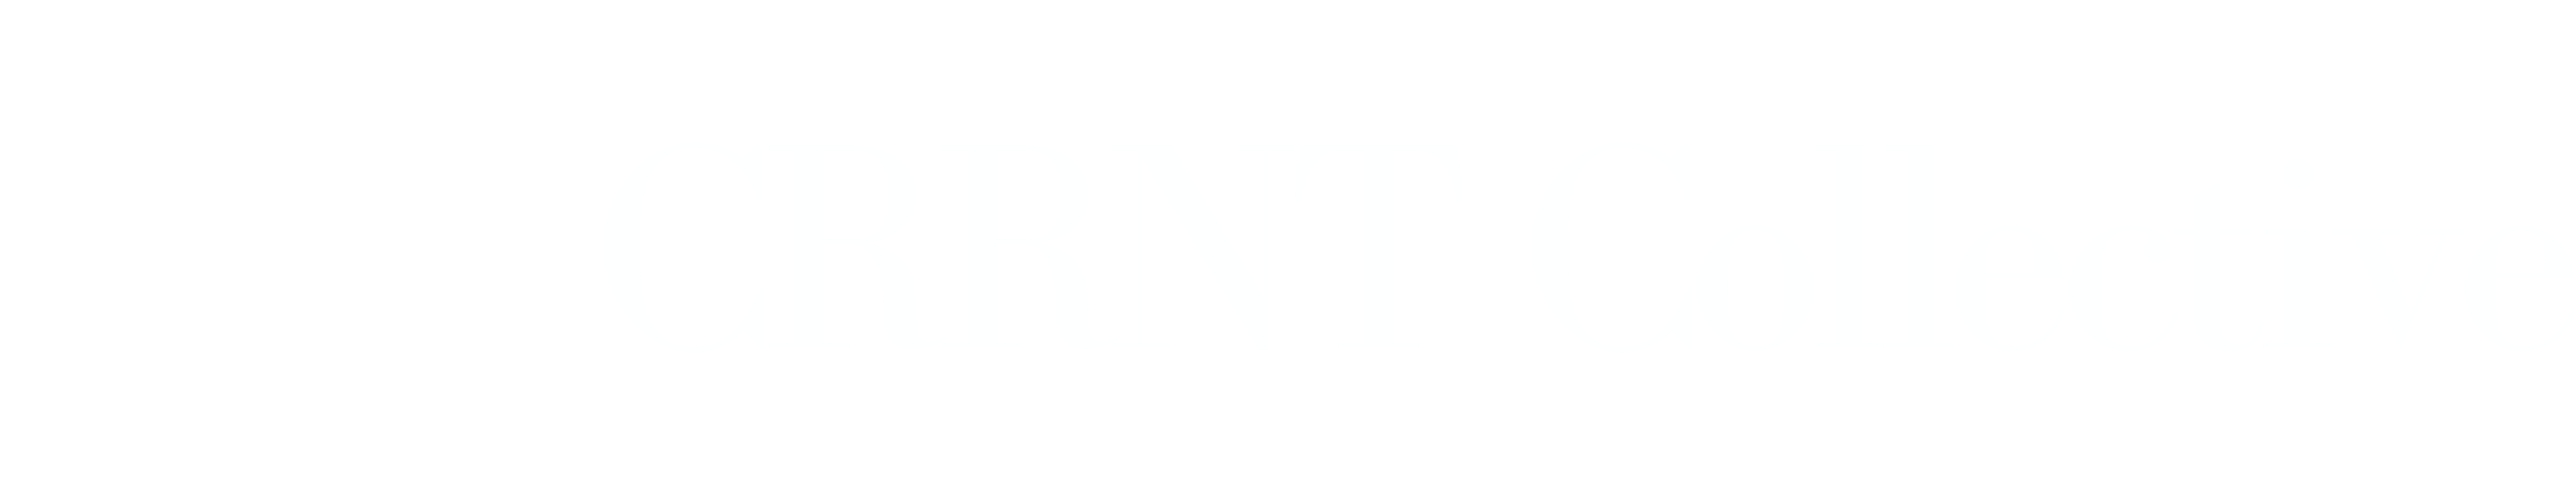 CRRNT.net